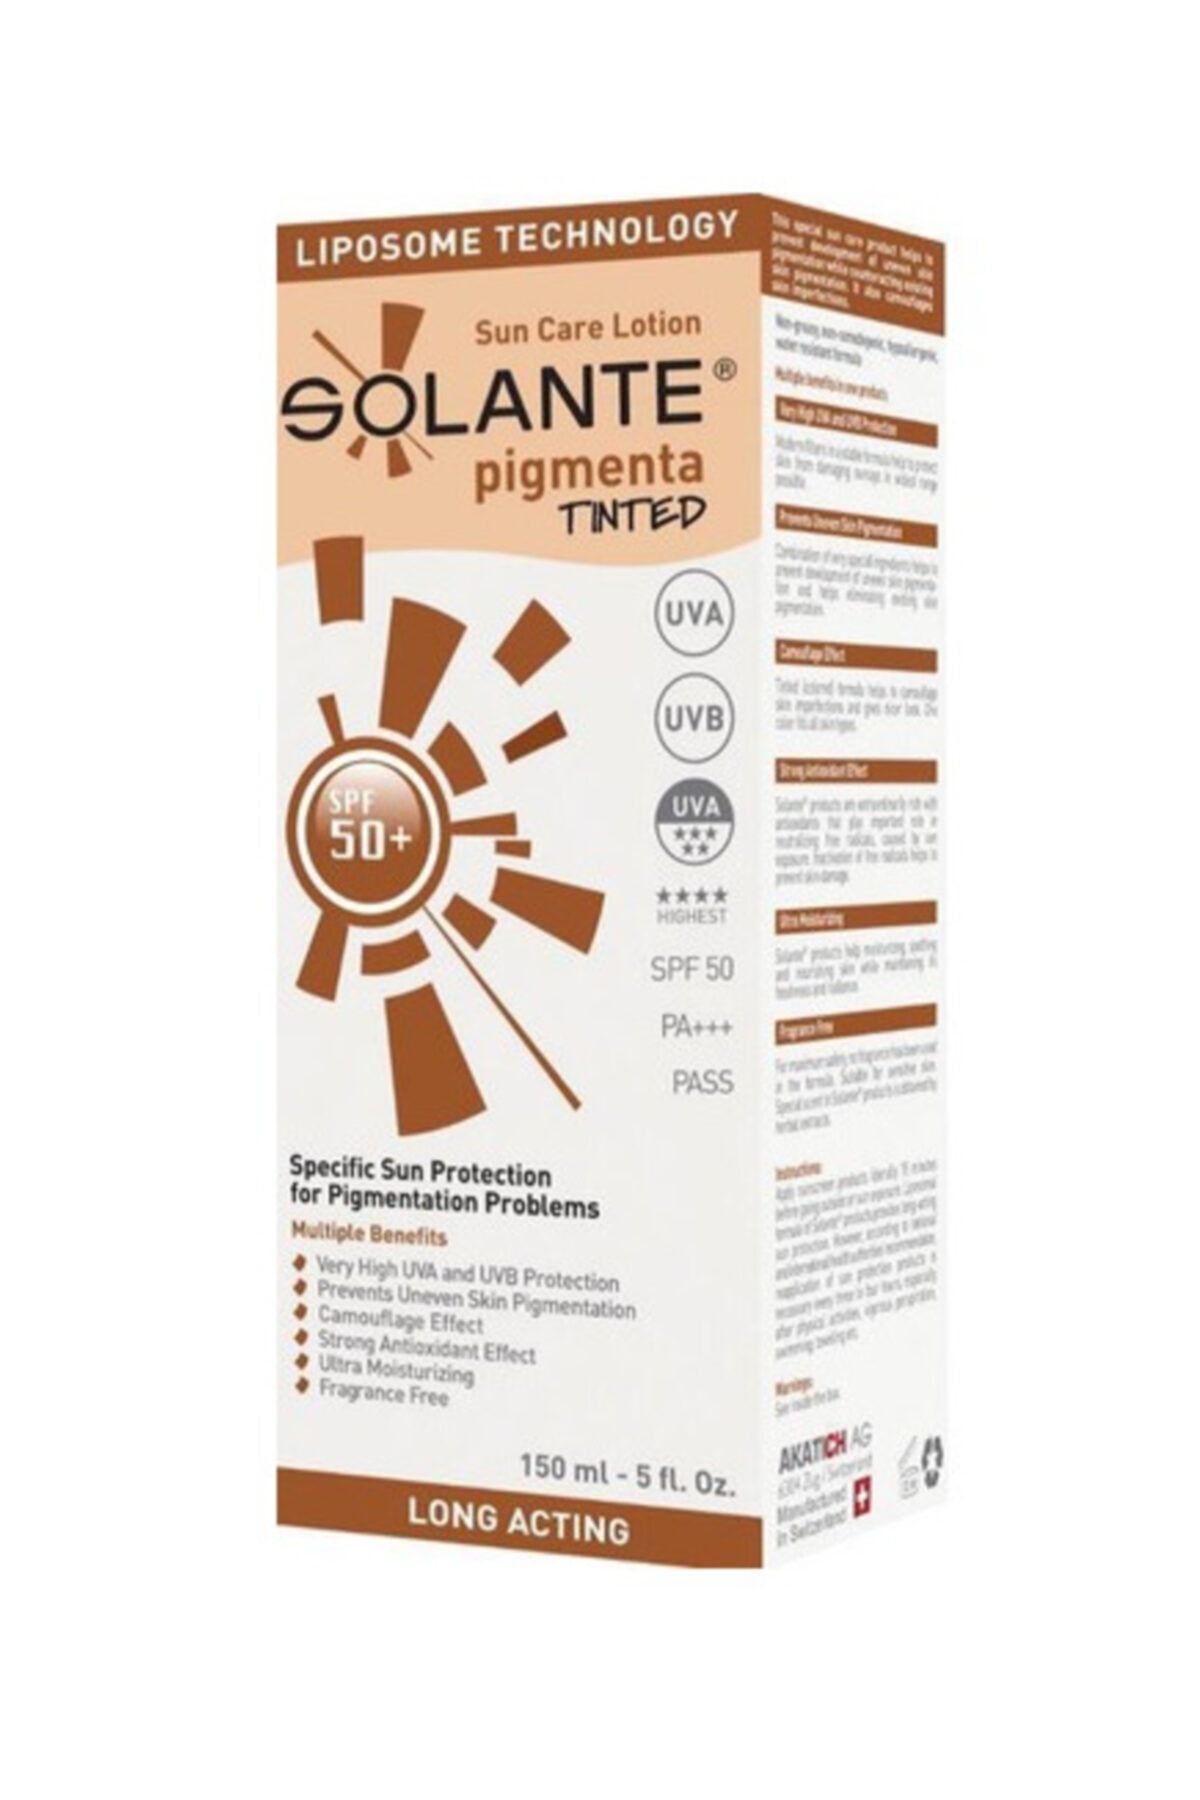 Solante Pigmenta Tinted Koyu Lekelere Karşı Güneş Losyonu Spf 50+